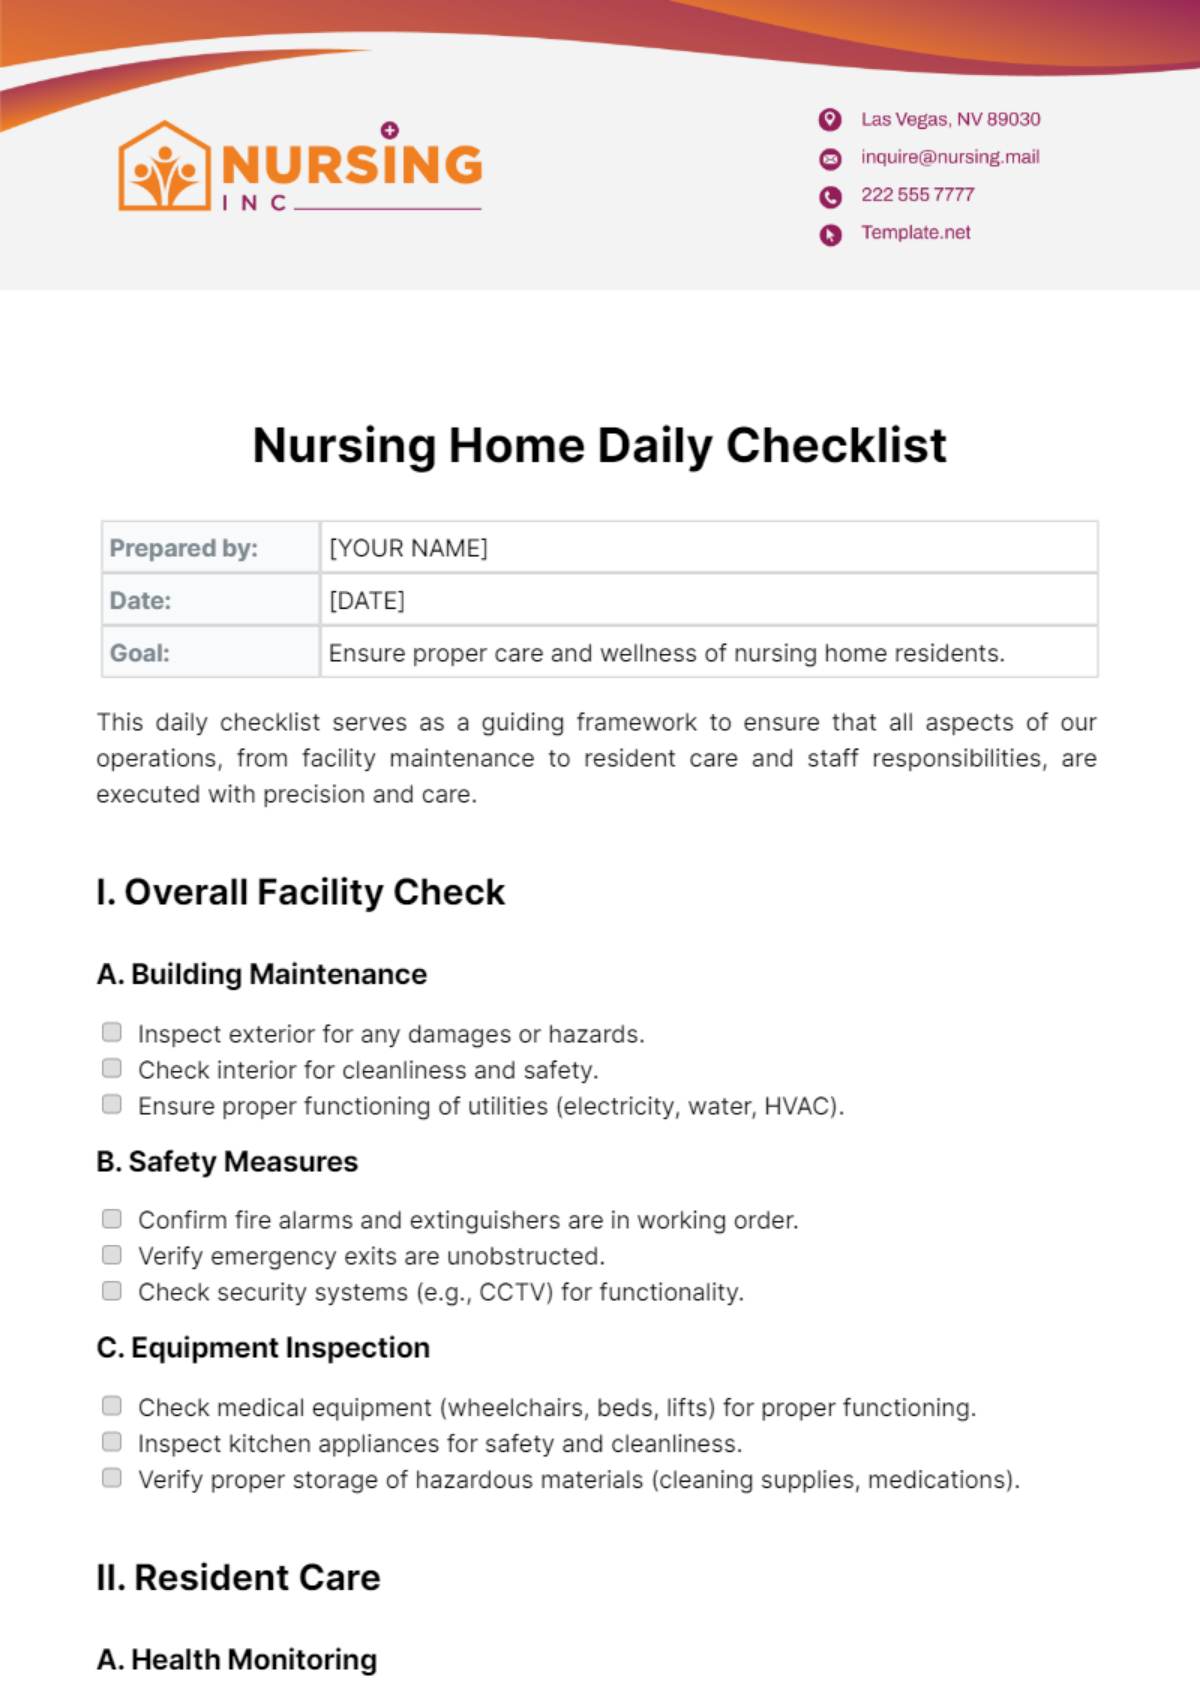 Nursing Home Daily Checklist Template